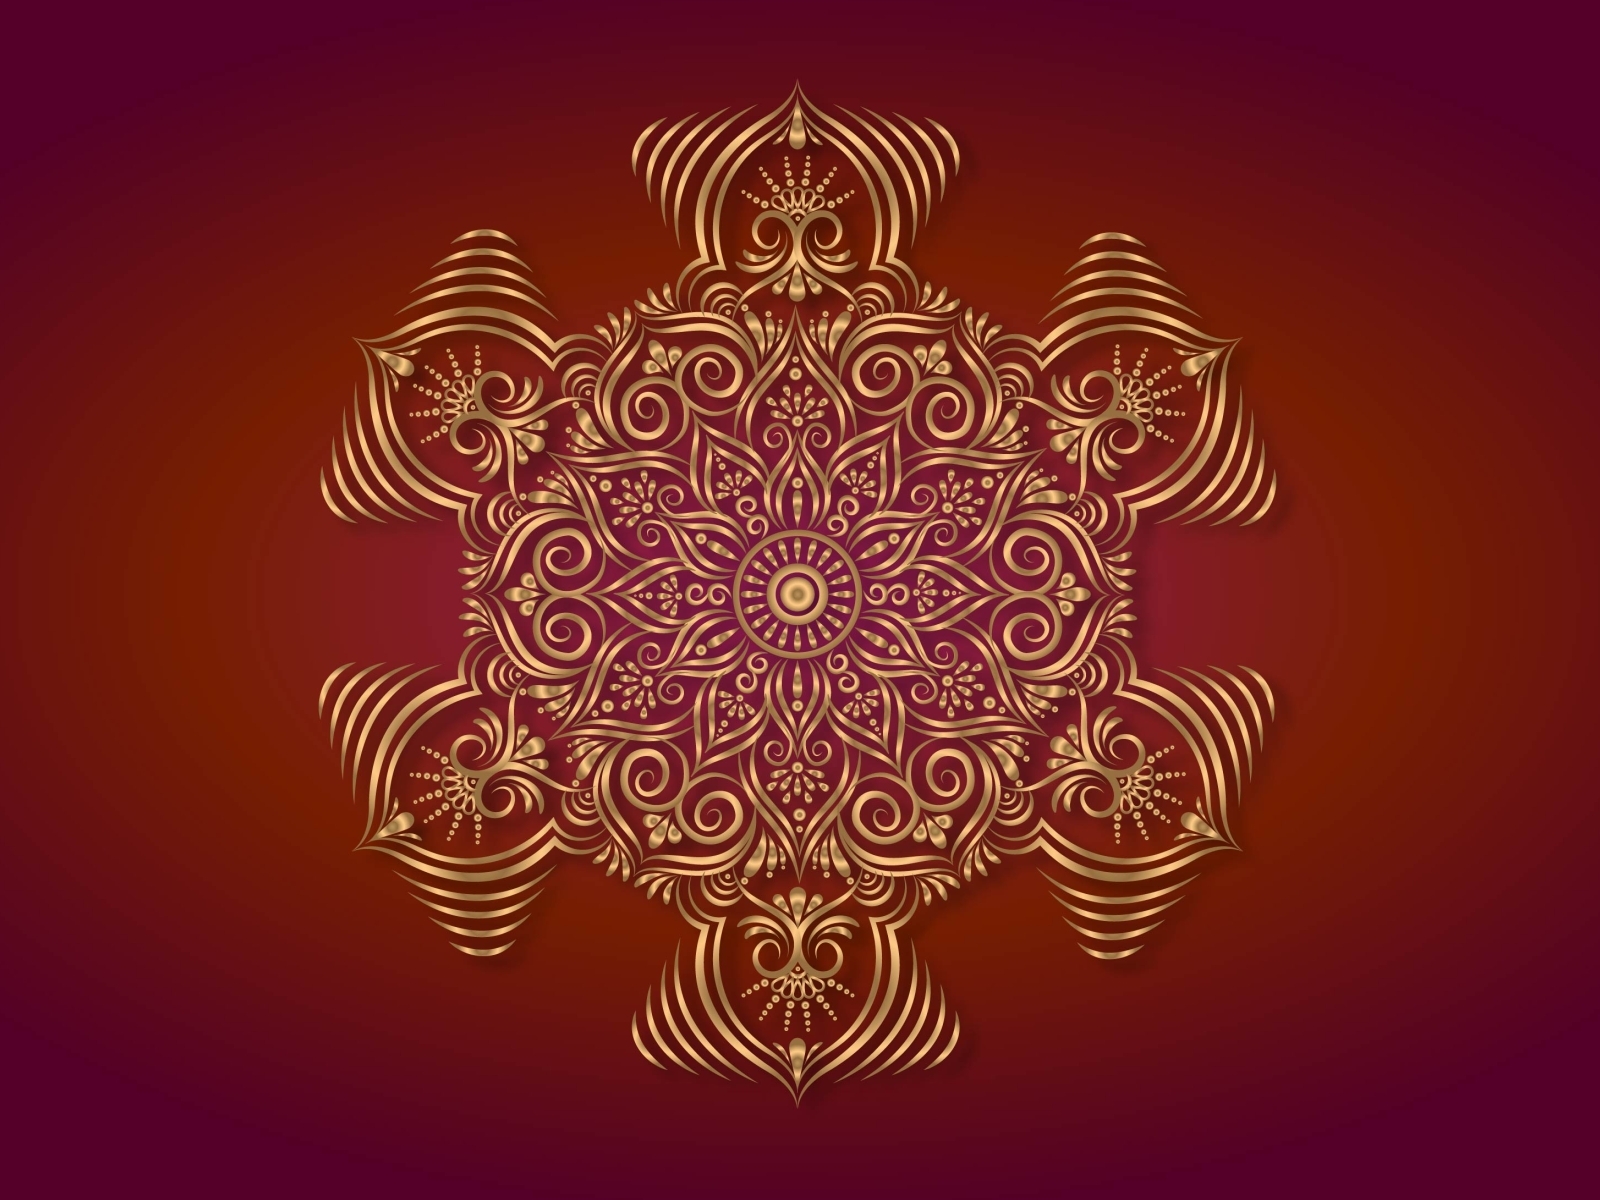 Mandala Design by Swapnal Jain on Dribbble